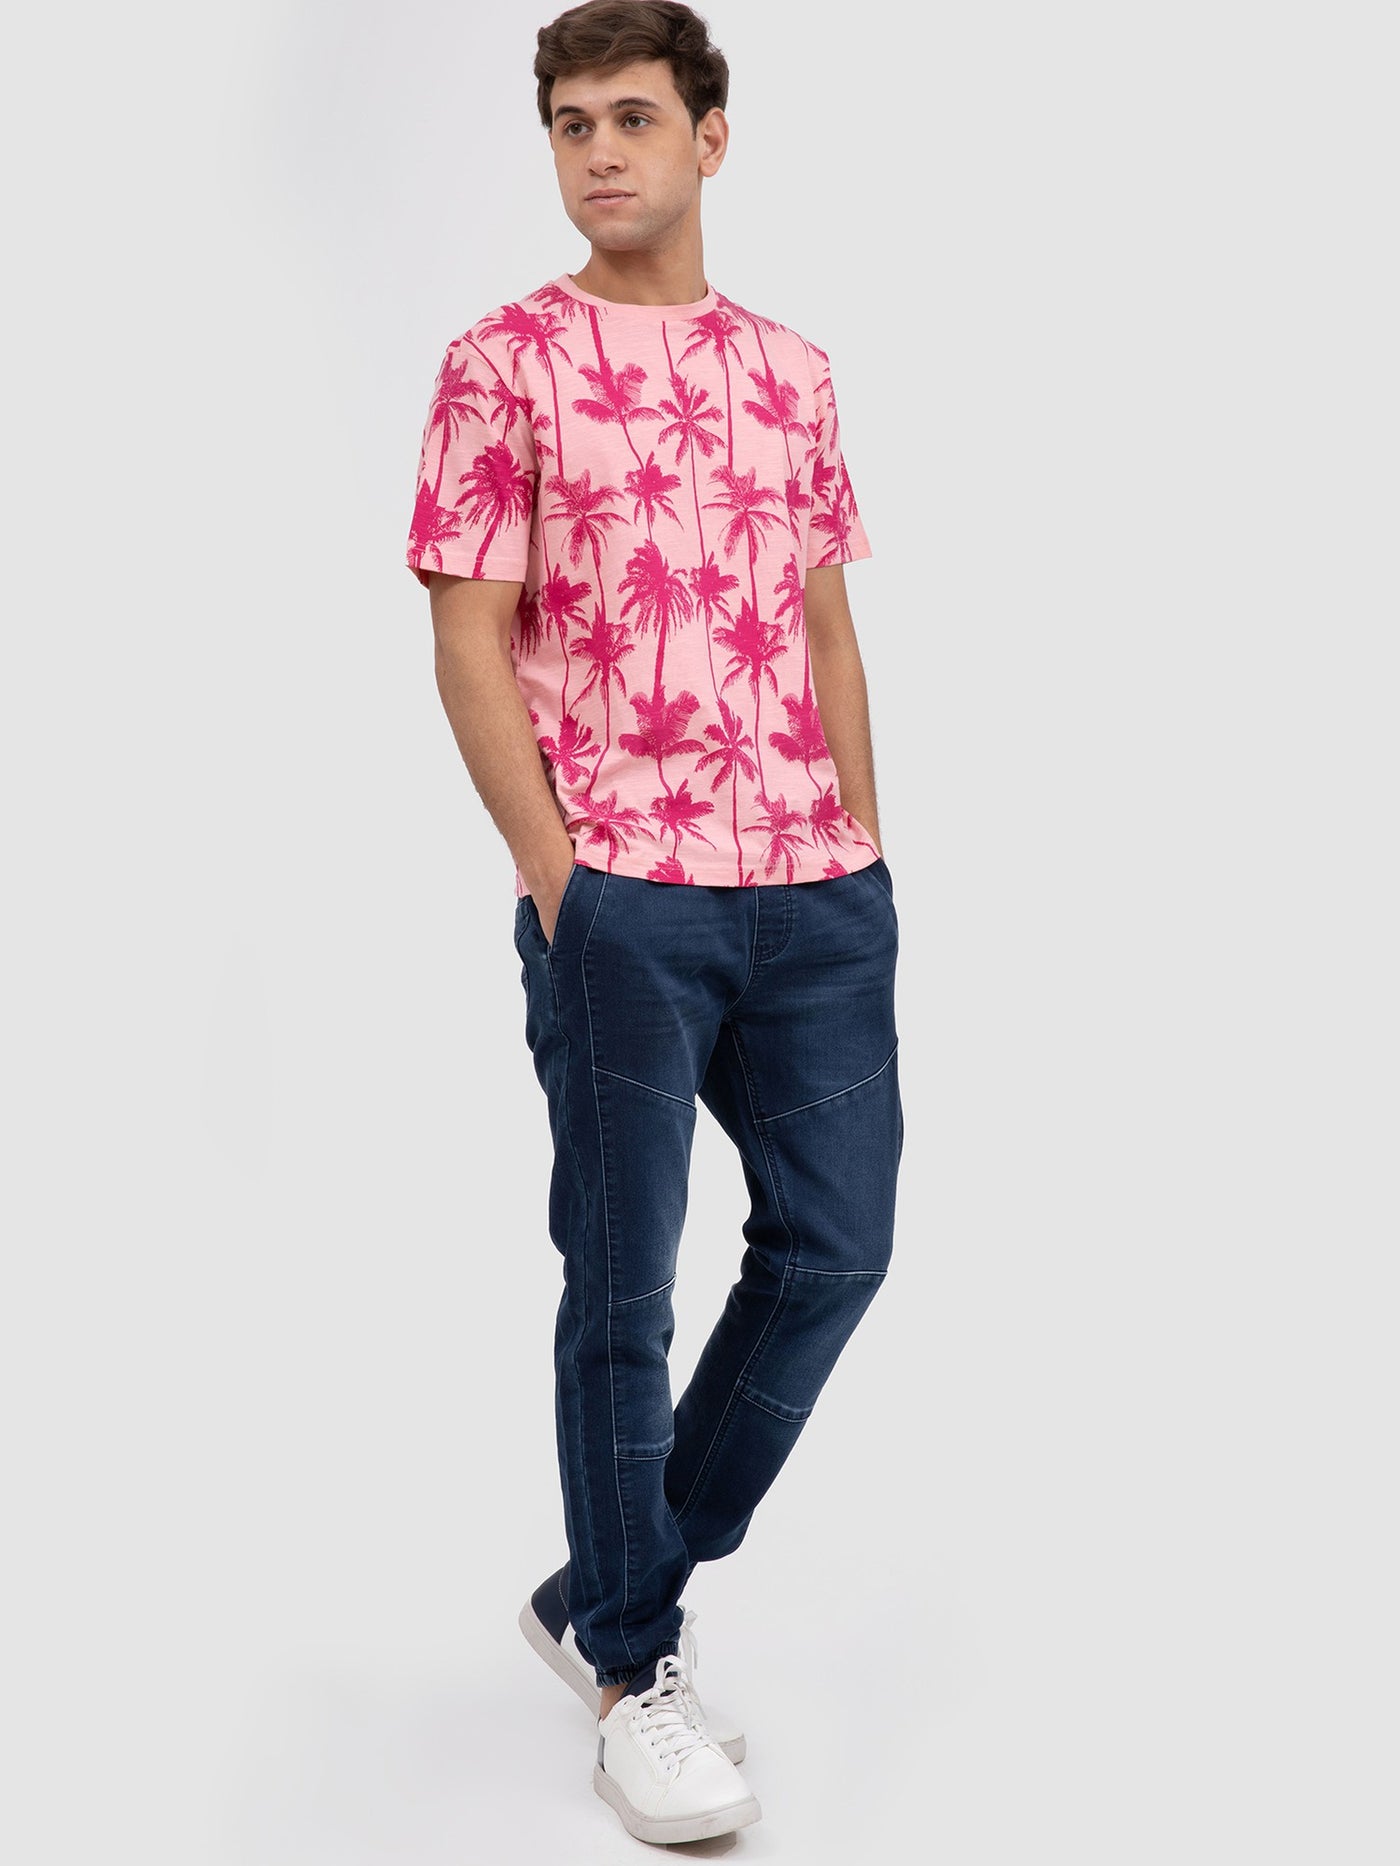 Premoda Mens All-Over Palms Printed T-Shirt